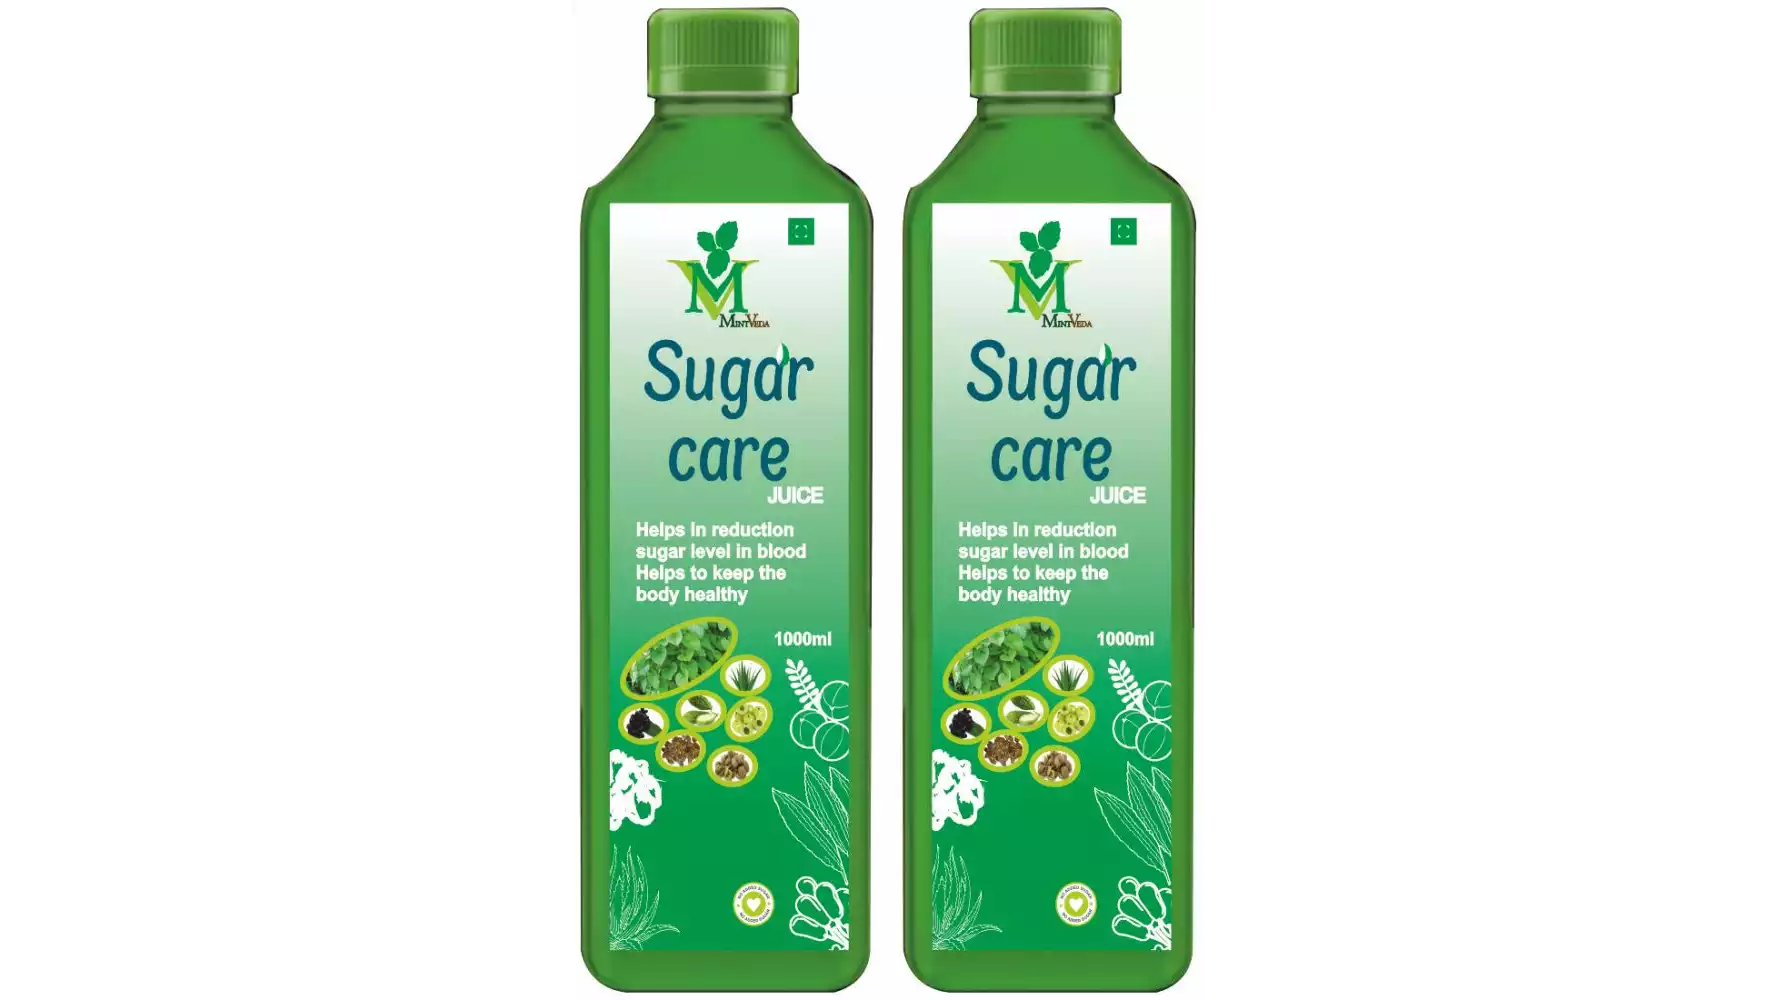 Mint Veda Sugar Care (Sugar Free) Juice (1liter, Pack of 2)